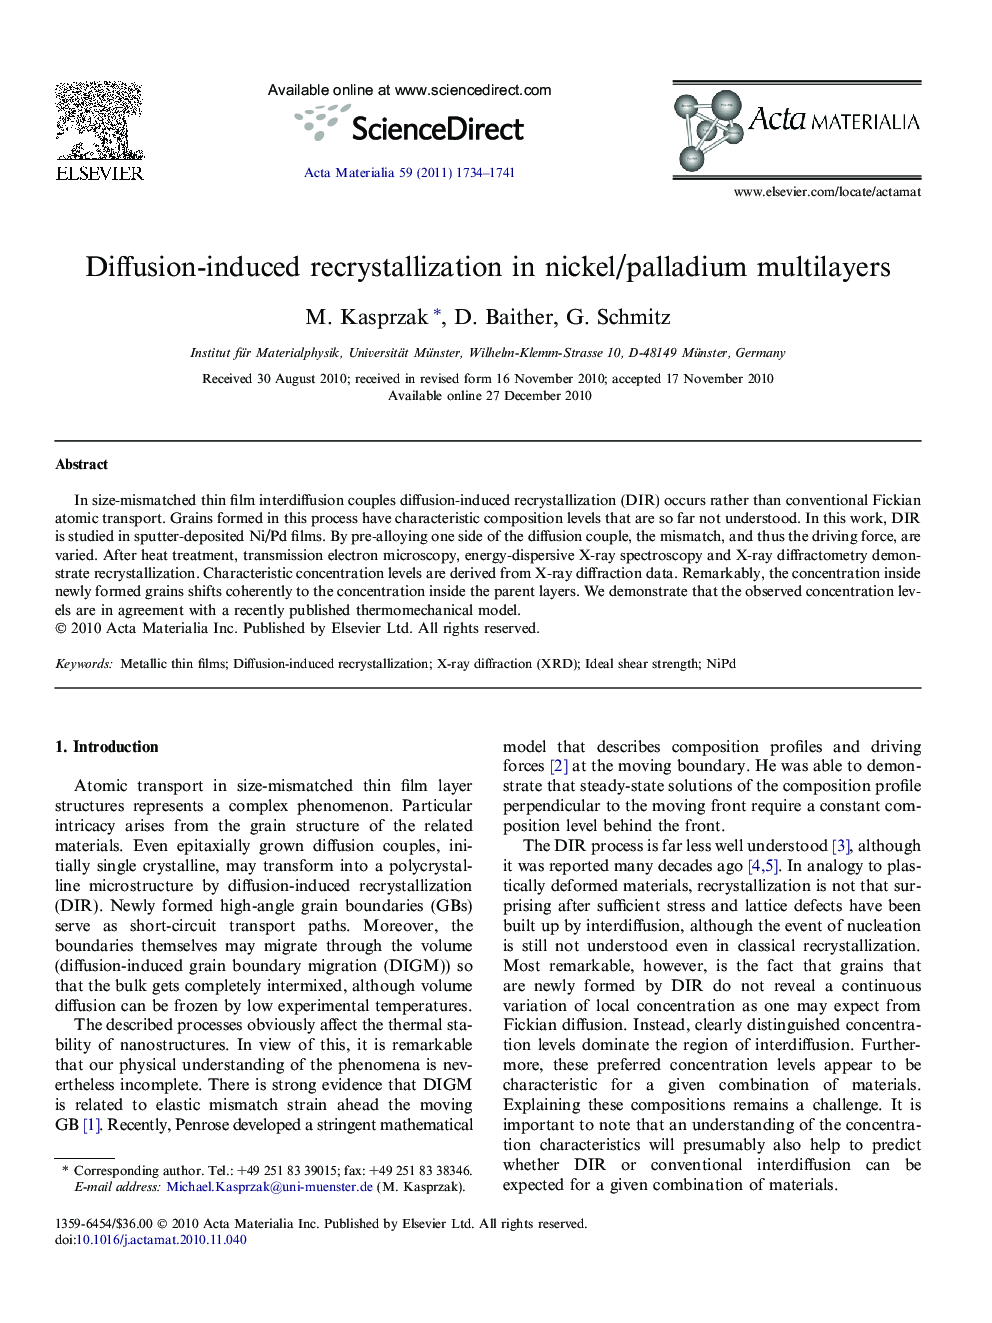 Diffusion-induced recrystallization in nickel/palladium multilayers